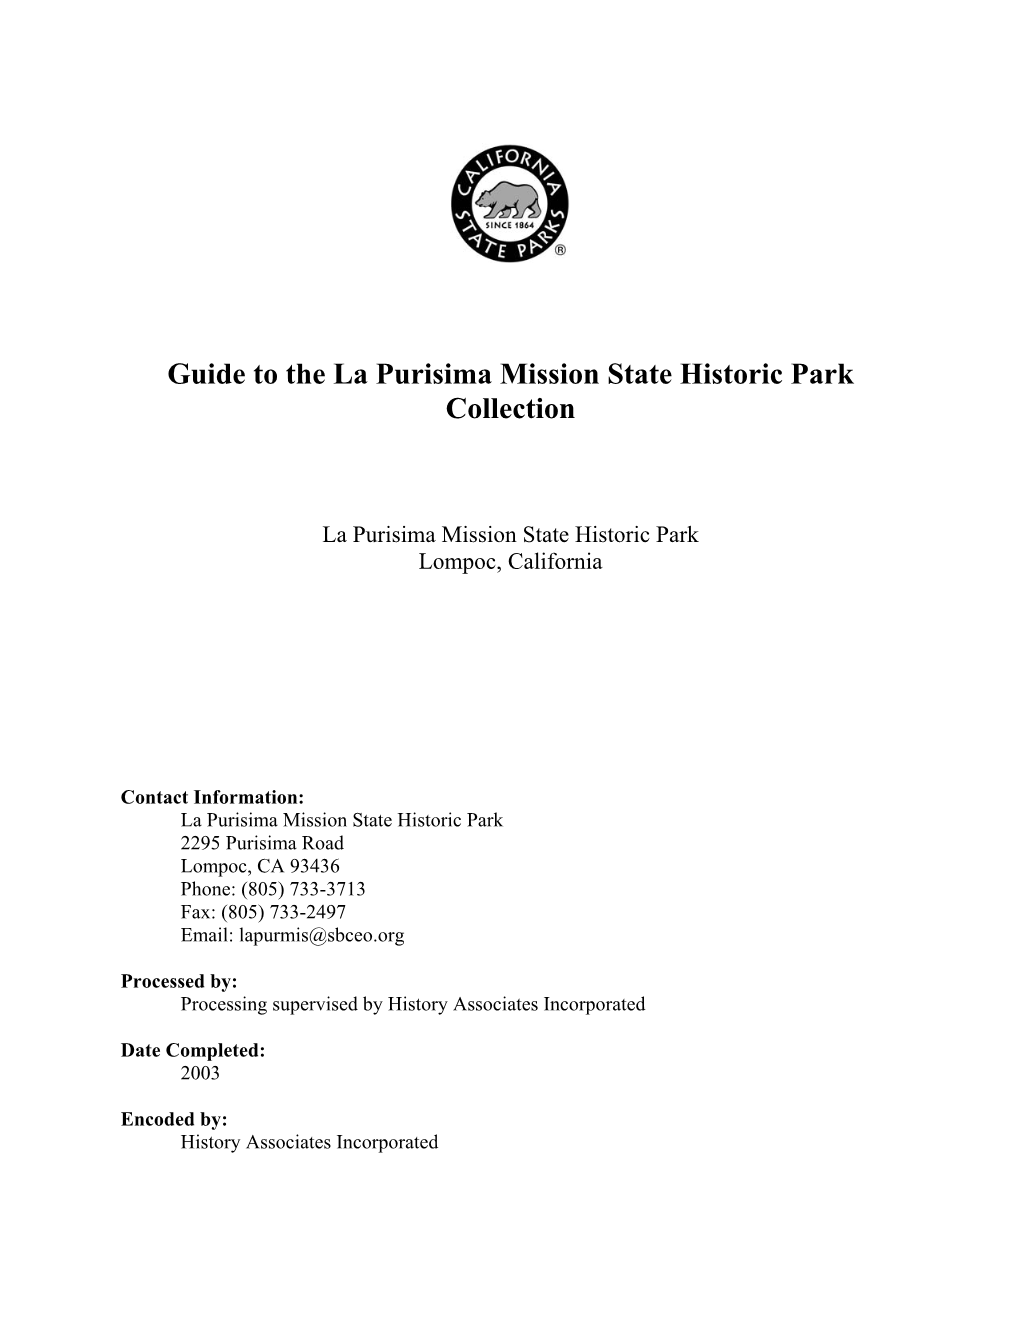 Guide to the La Purisima Mission State Historic Park Collection